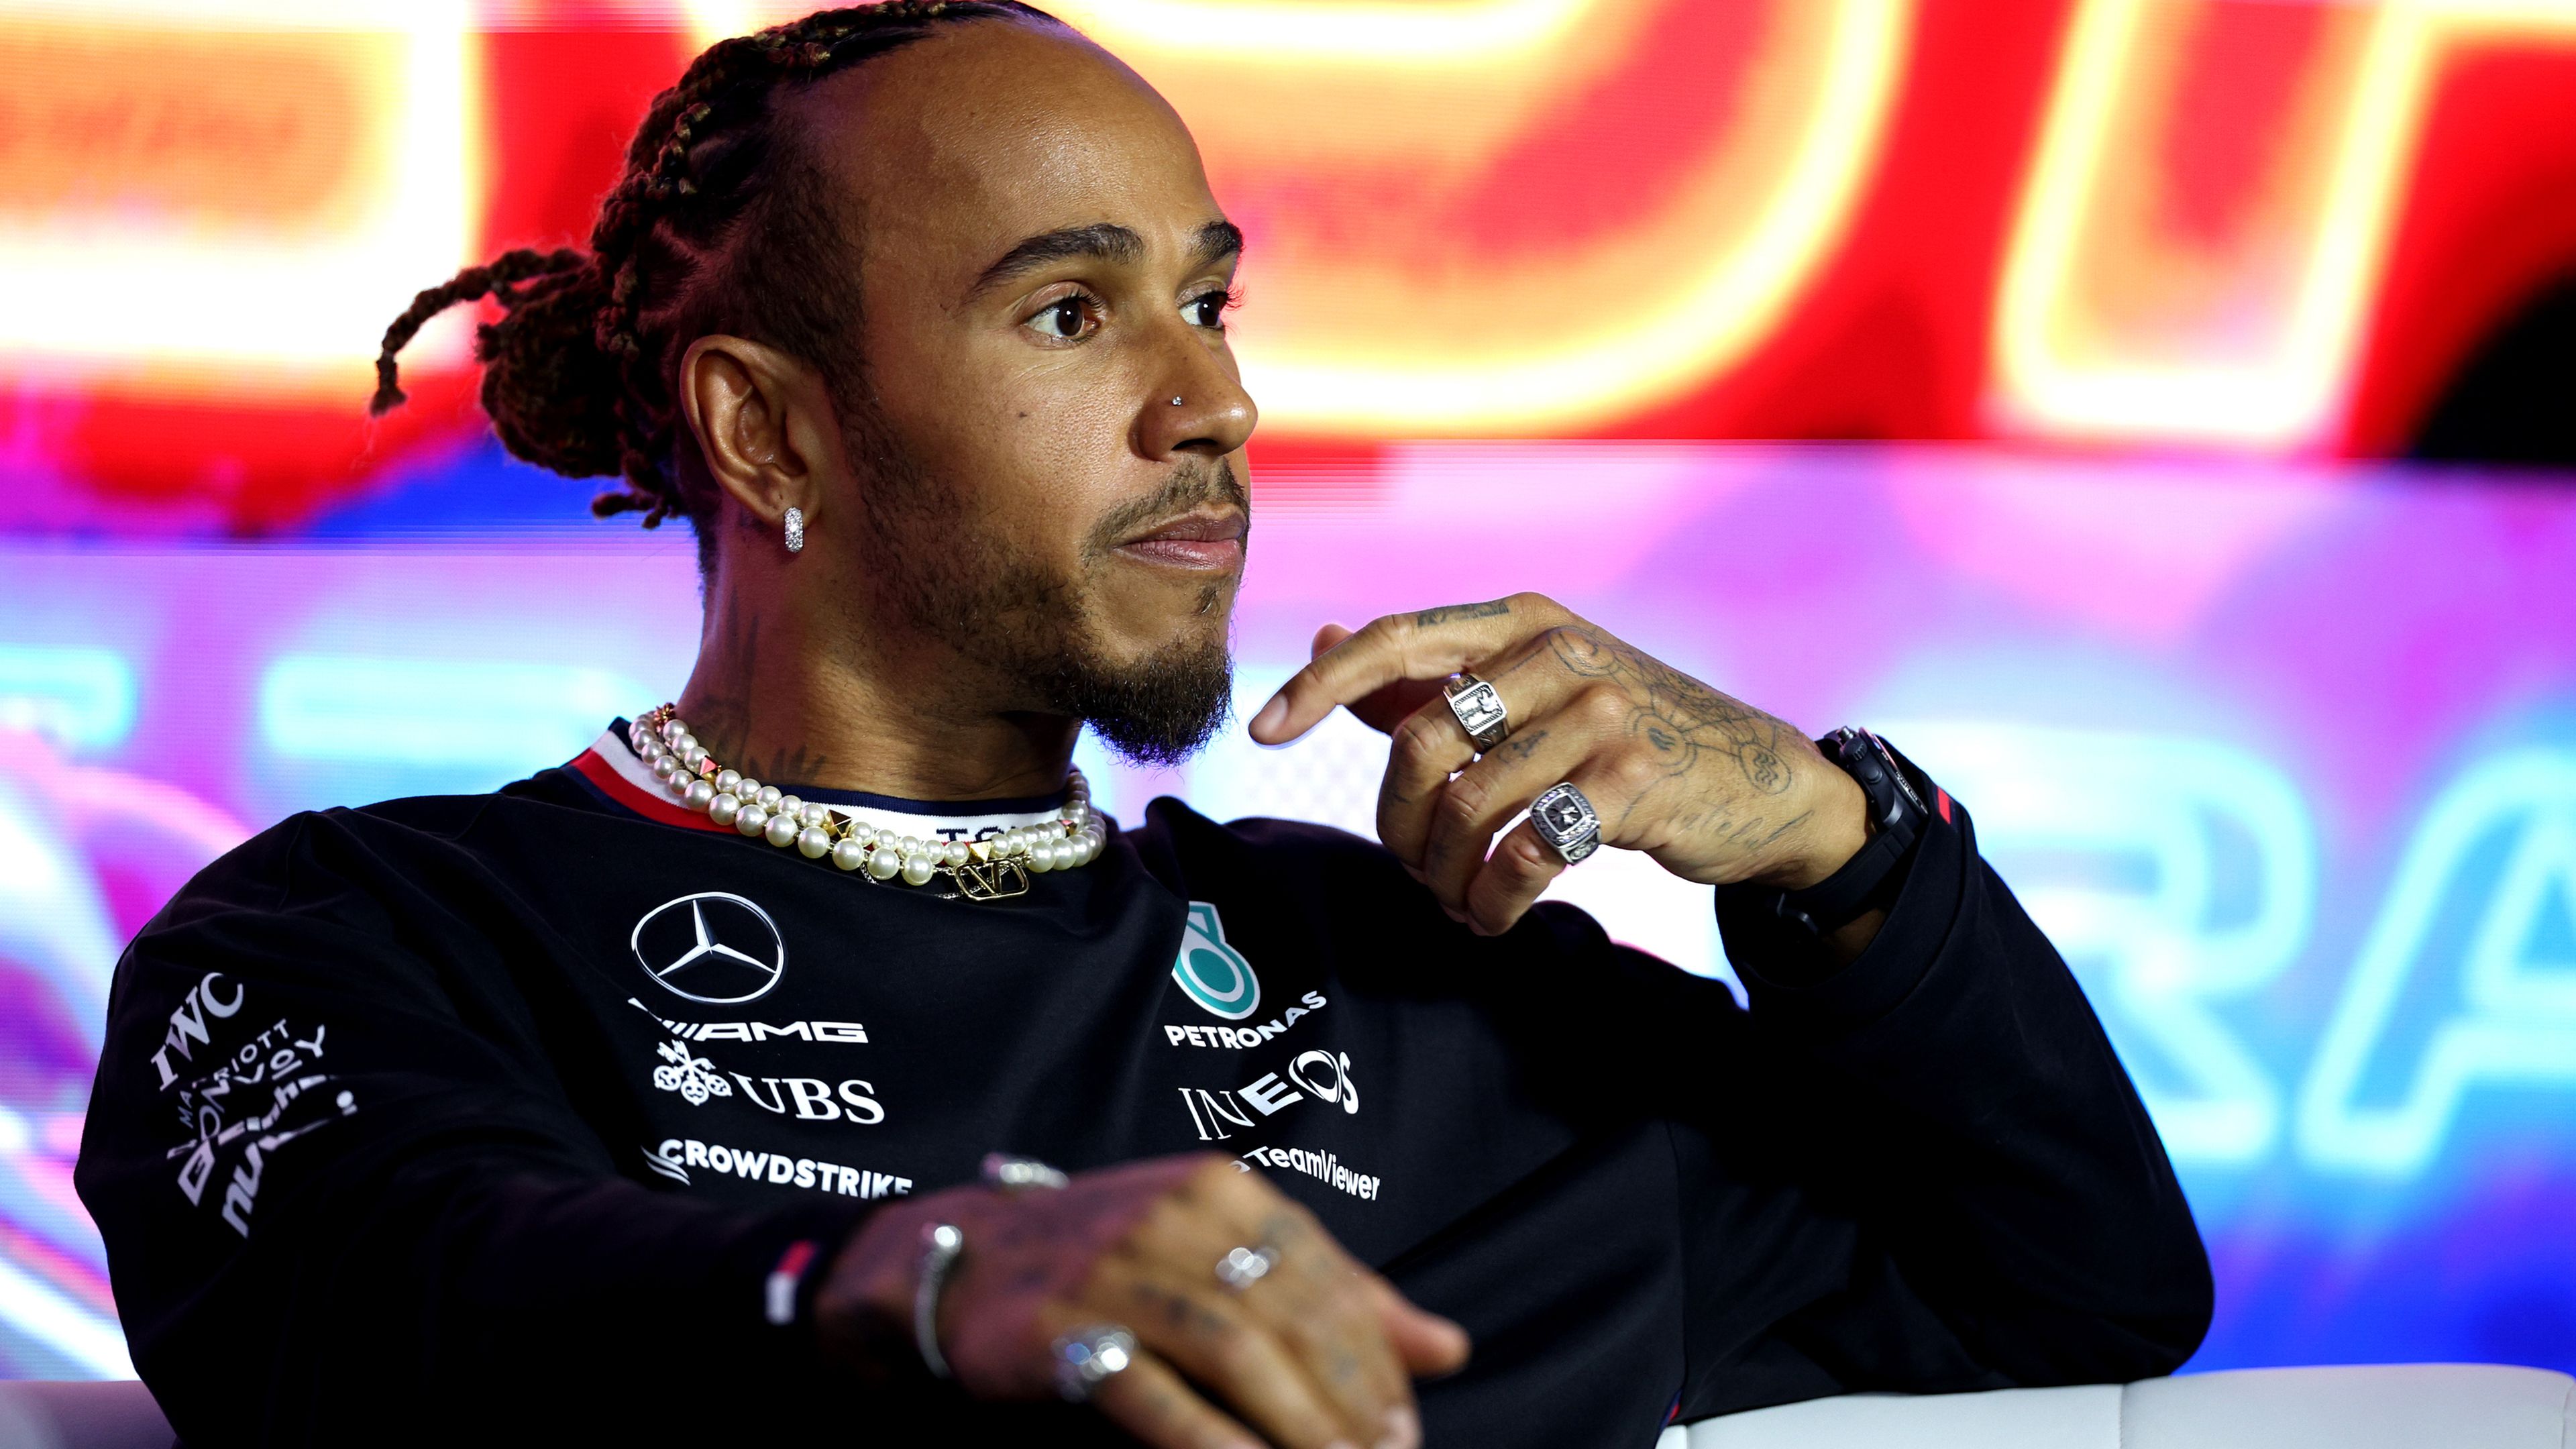 Lewis Hamilton's 'classy' act before bombshell Ferrari move